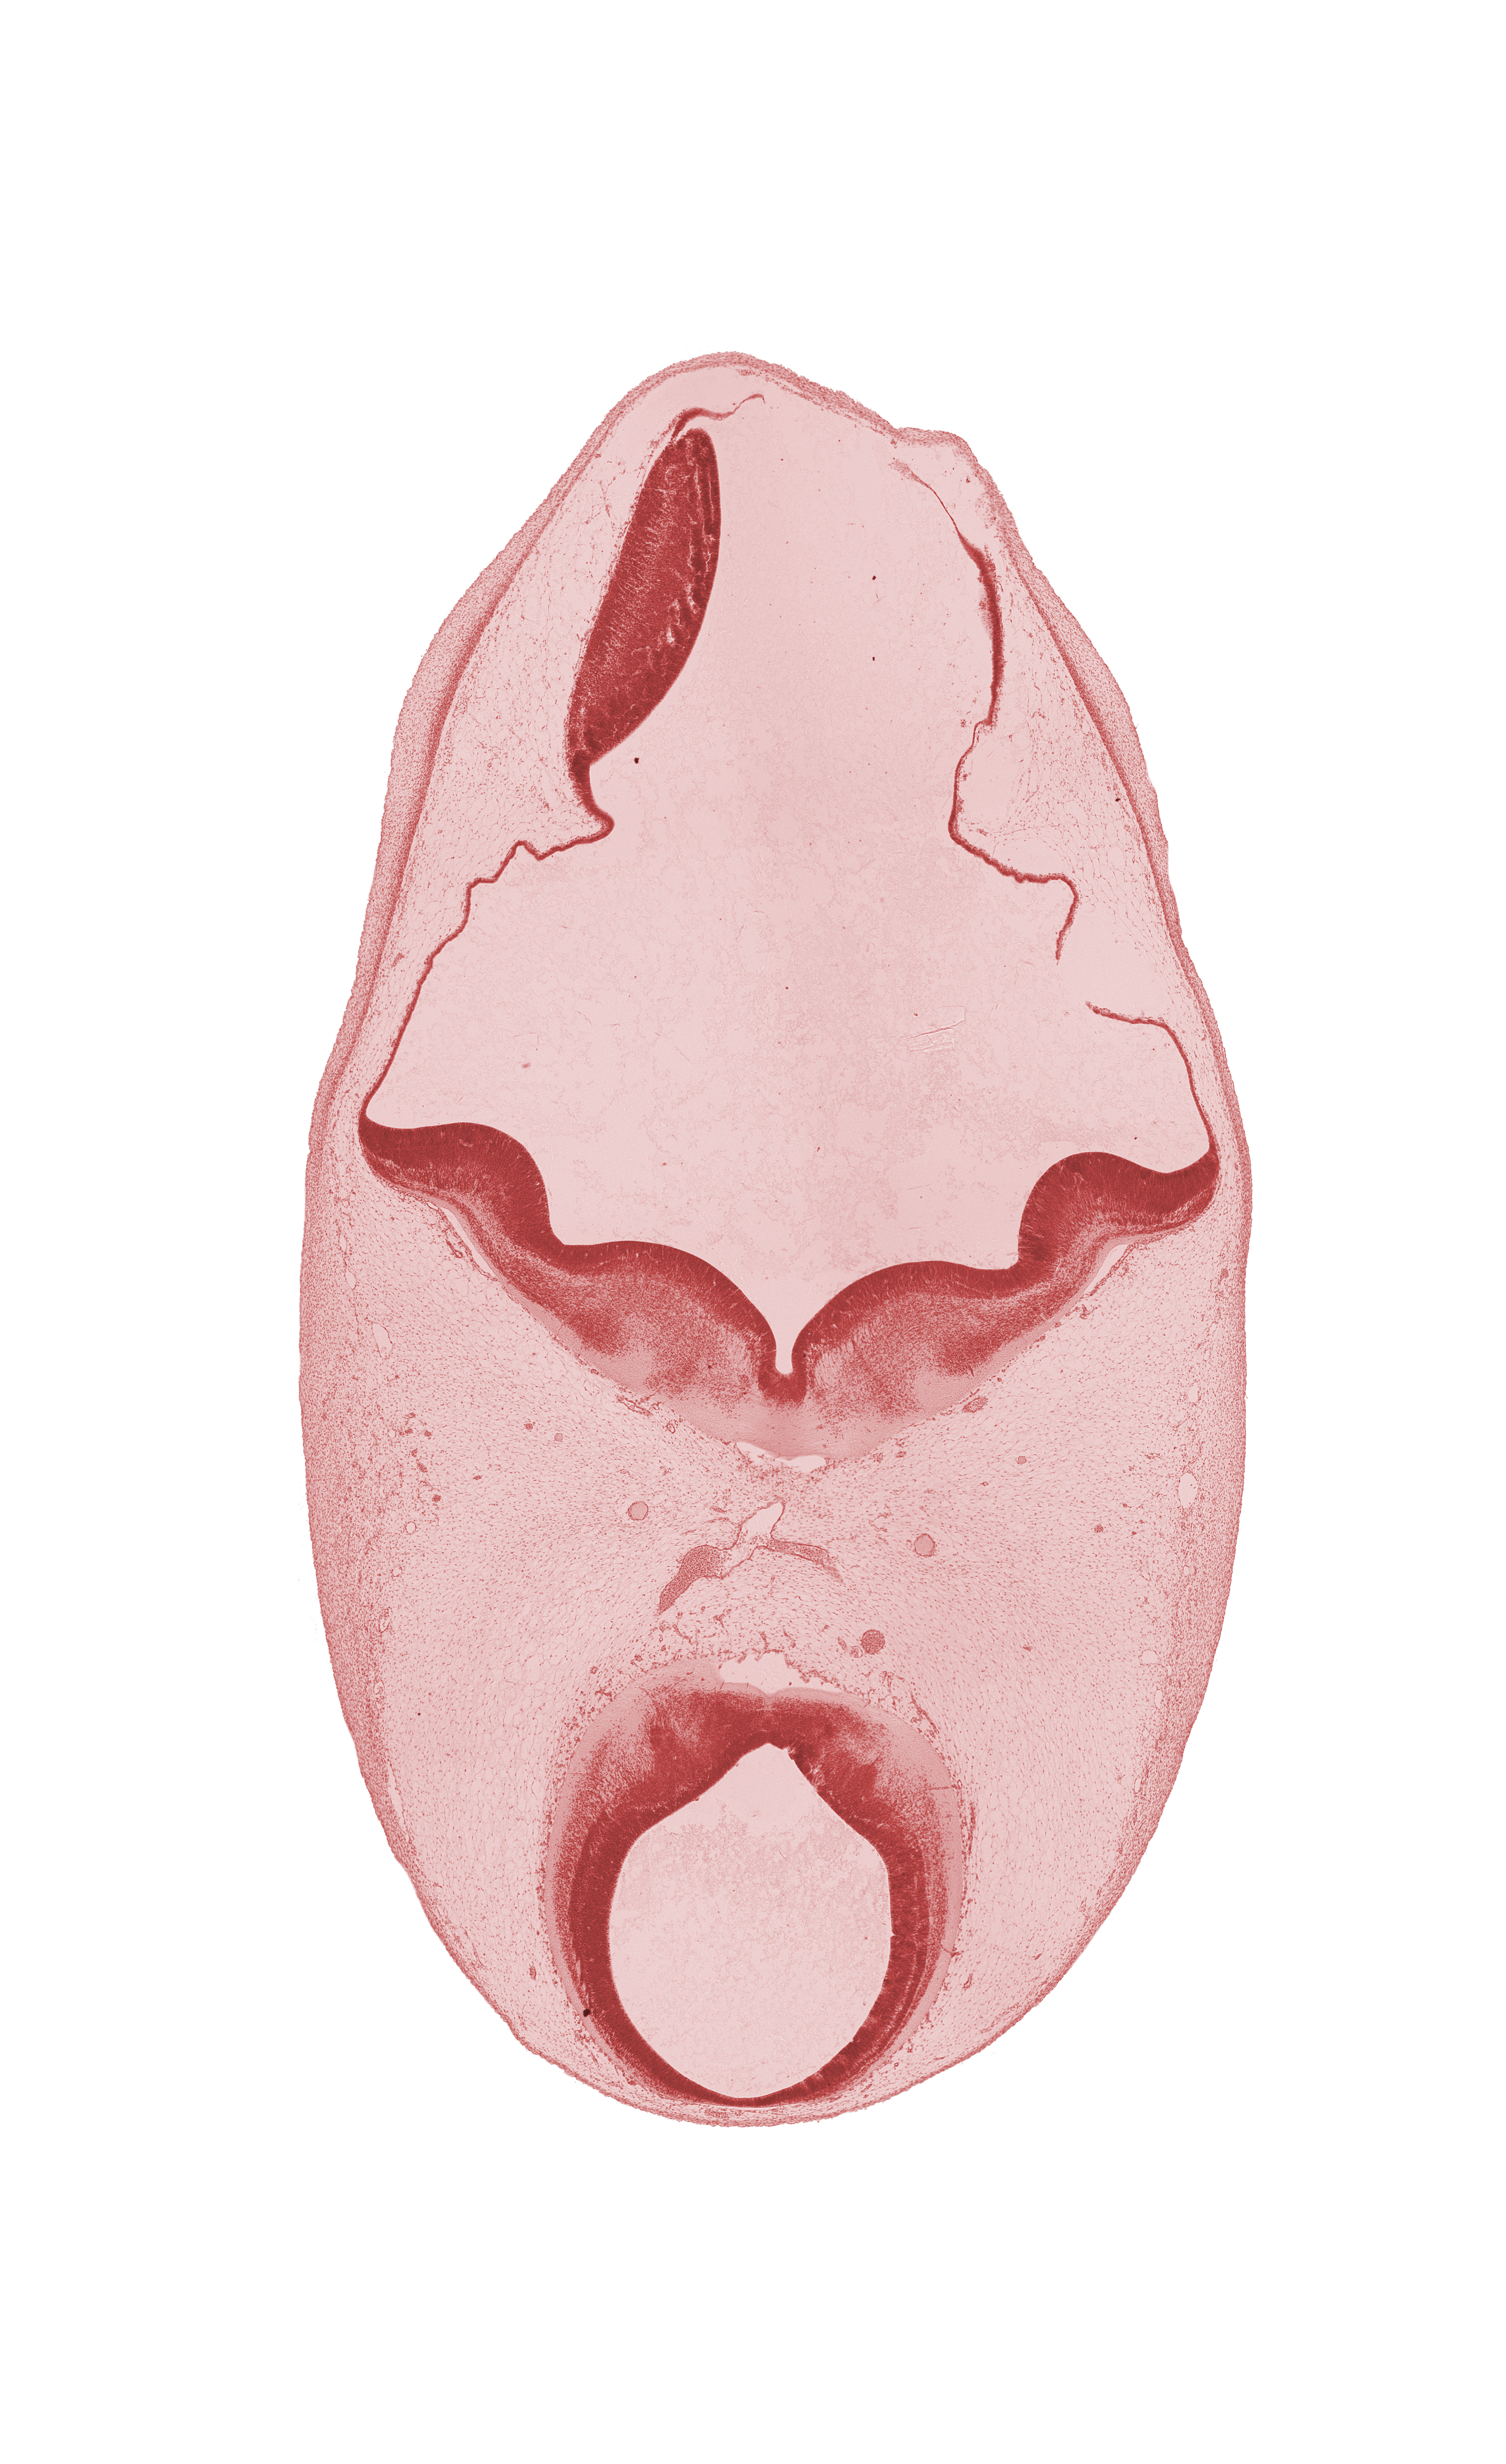 artifact separation(s), head mesenchyme, mesencephalon (M1), oculomotor nerve (CN III), osteogenic layer, posterior cerebral artery, subarachnoid space, surface ectoderm, termination of basilar artery, trochlear nerve (CN IV)